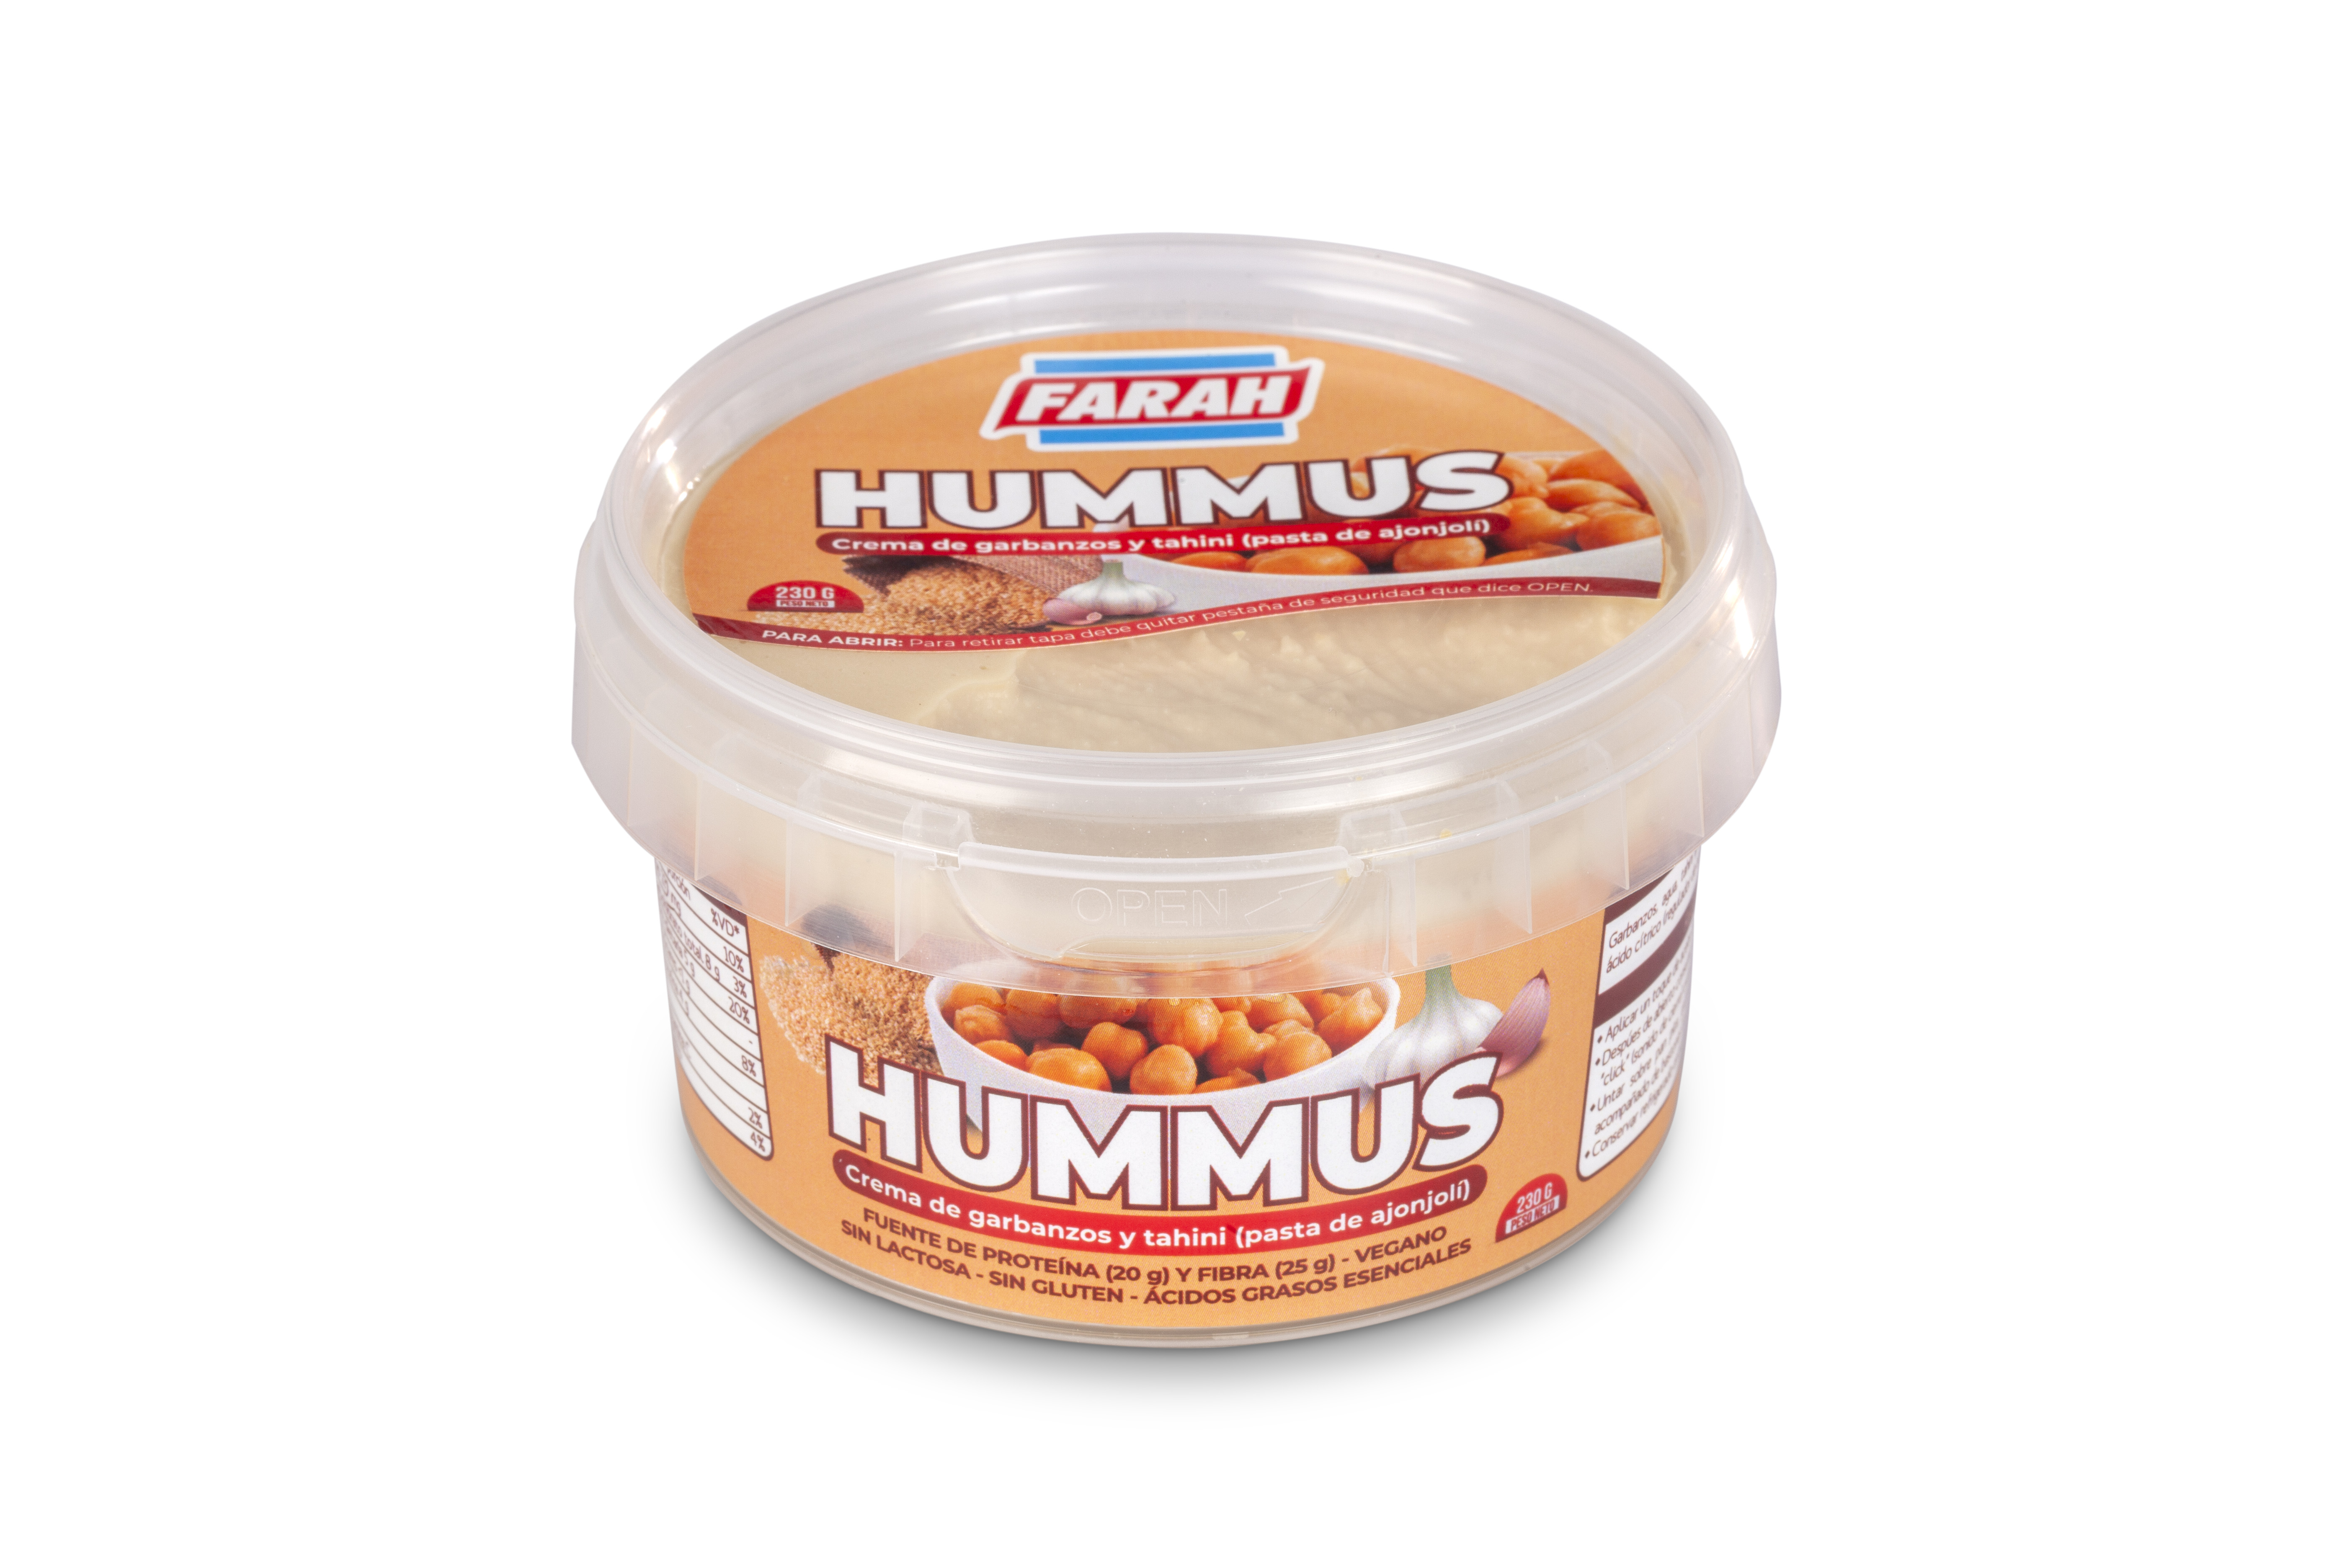 Hummus Farah